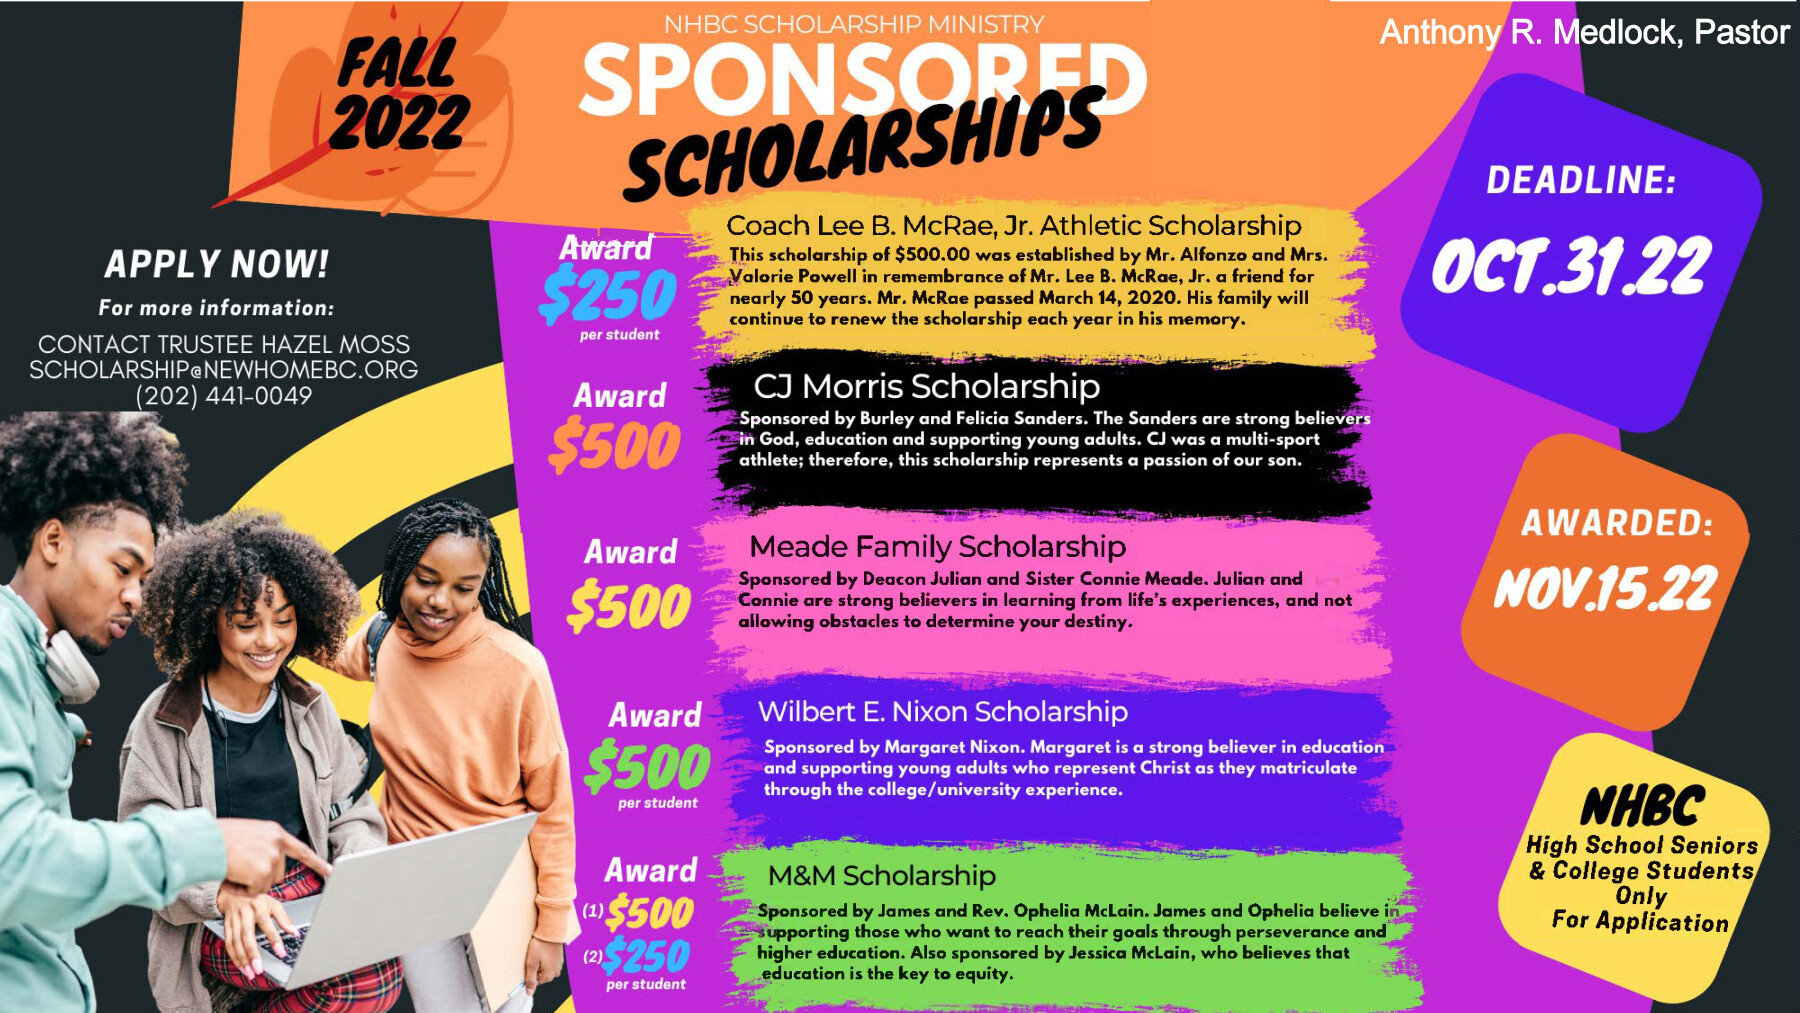 NHBC Fall 22 Scholarships